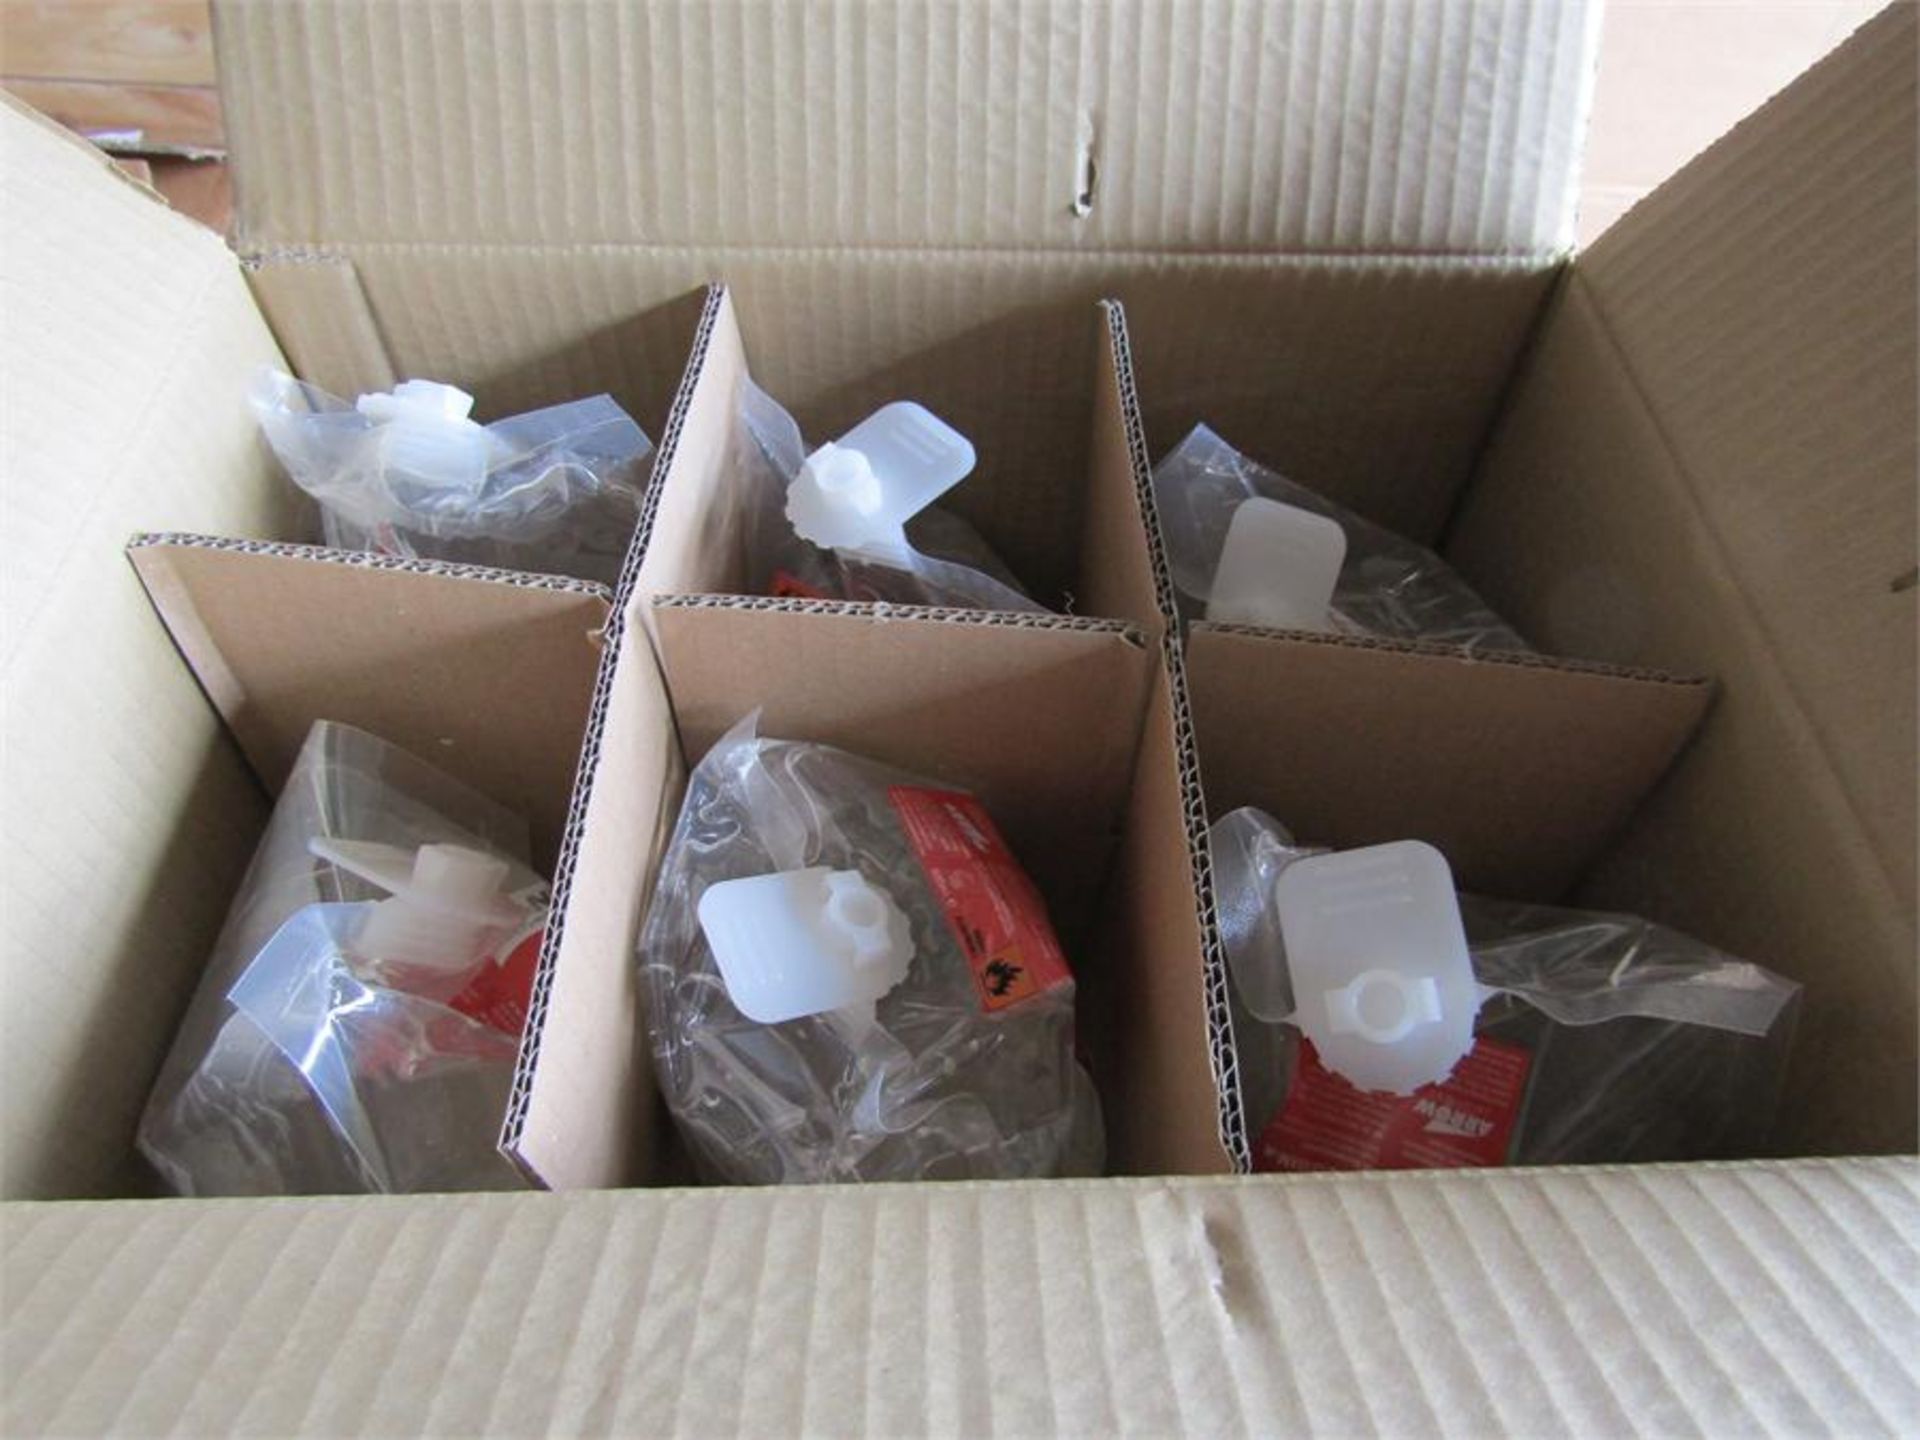 Box of 6 Arrow Hand Sanitiser Refills 800ml bags - Image 2 of 2